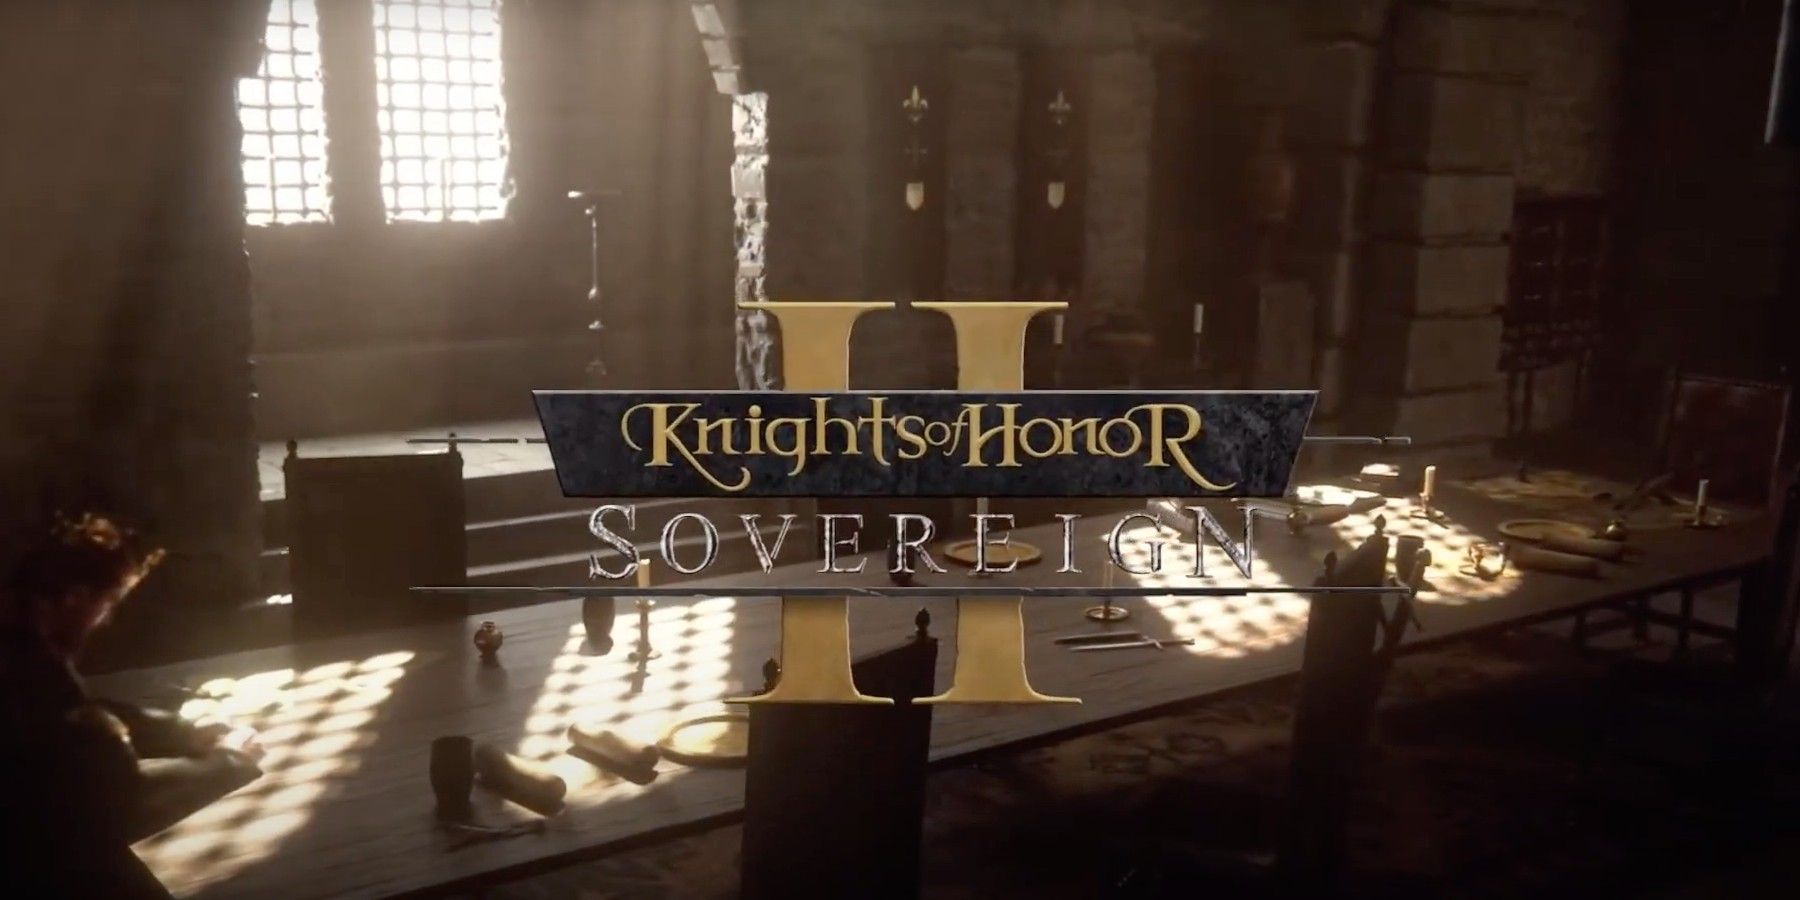 Beginner Tips For Knights Of Honor 2: Sovereign